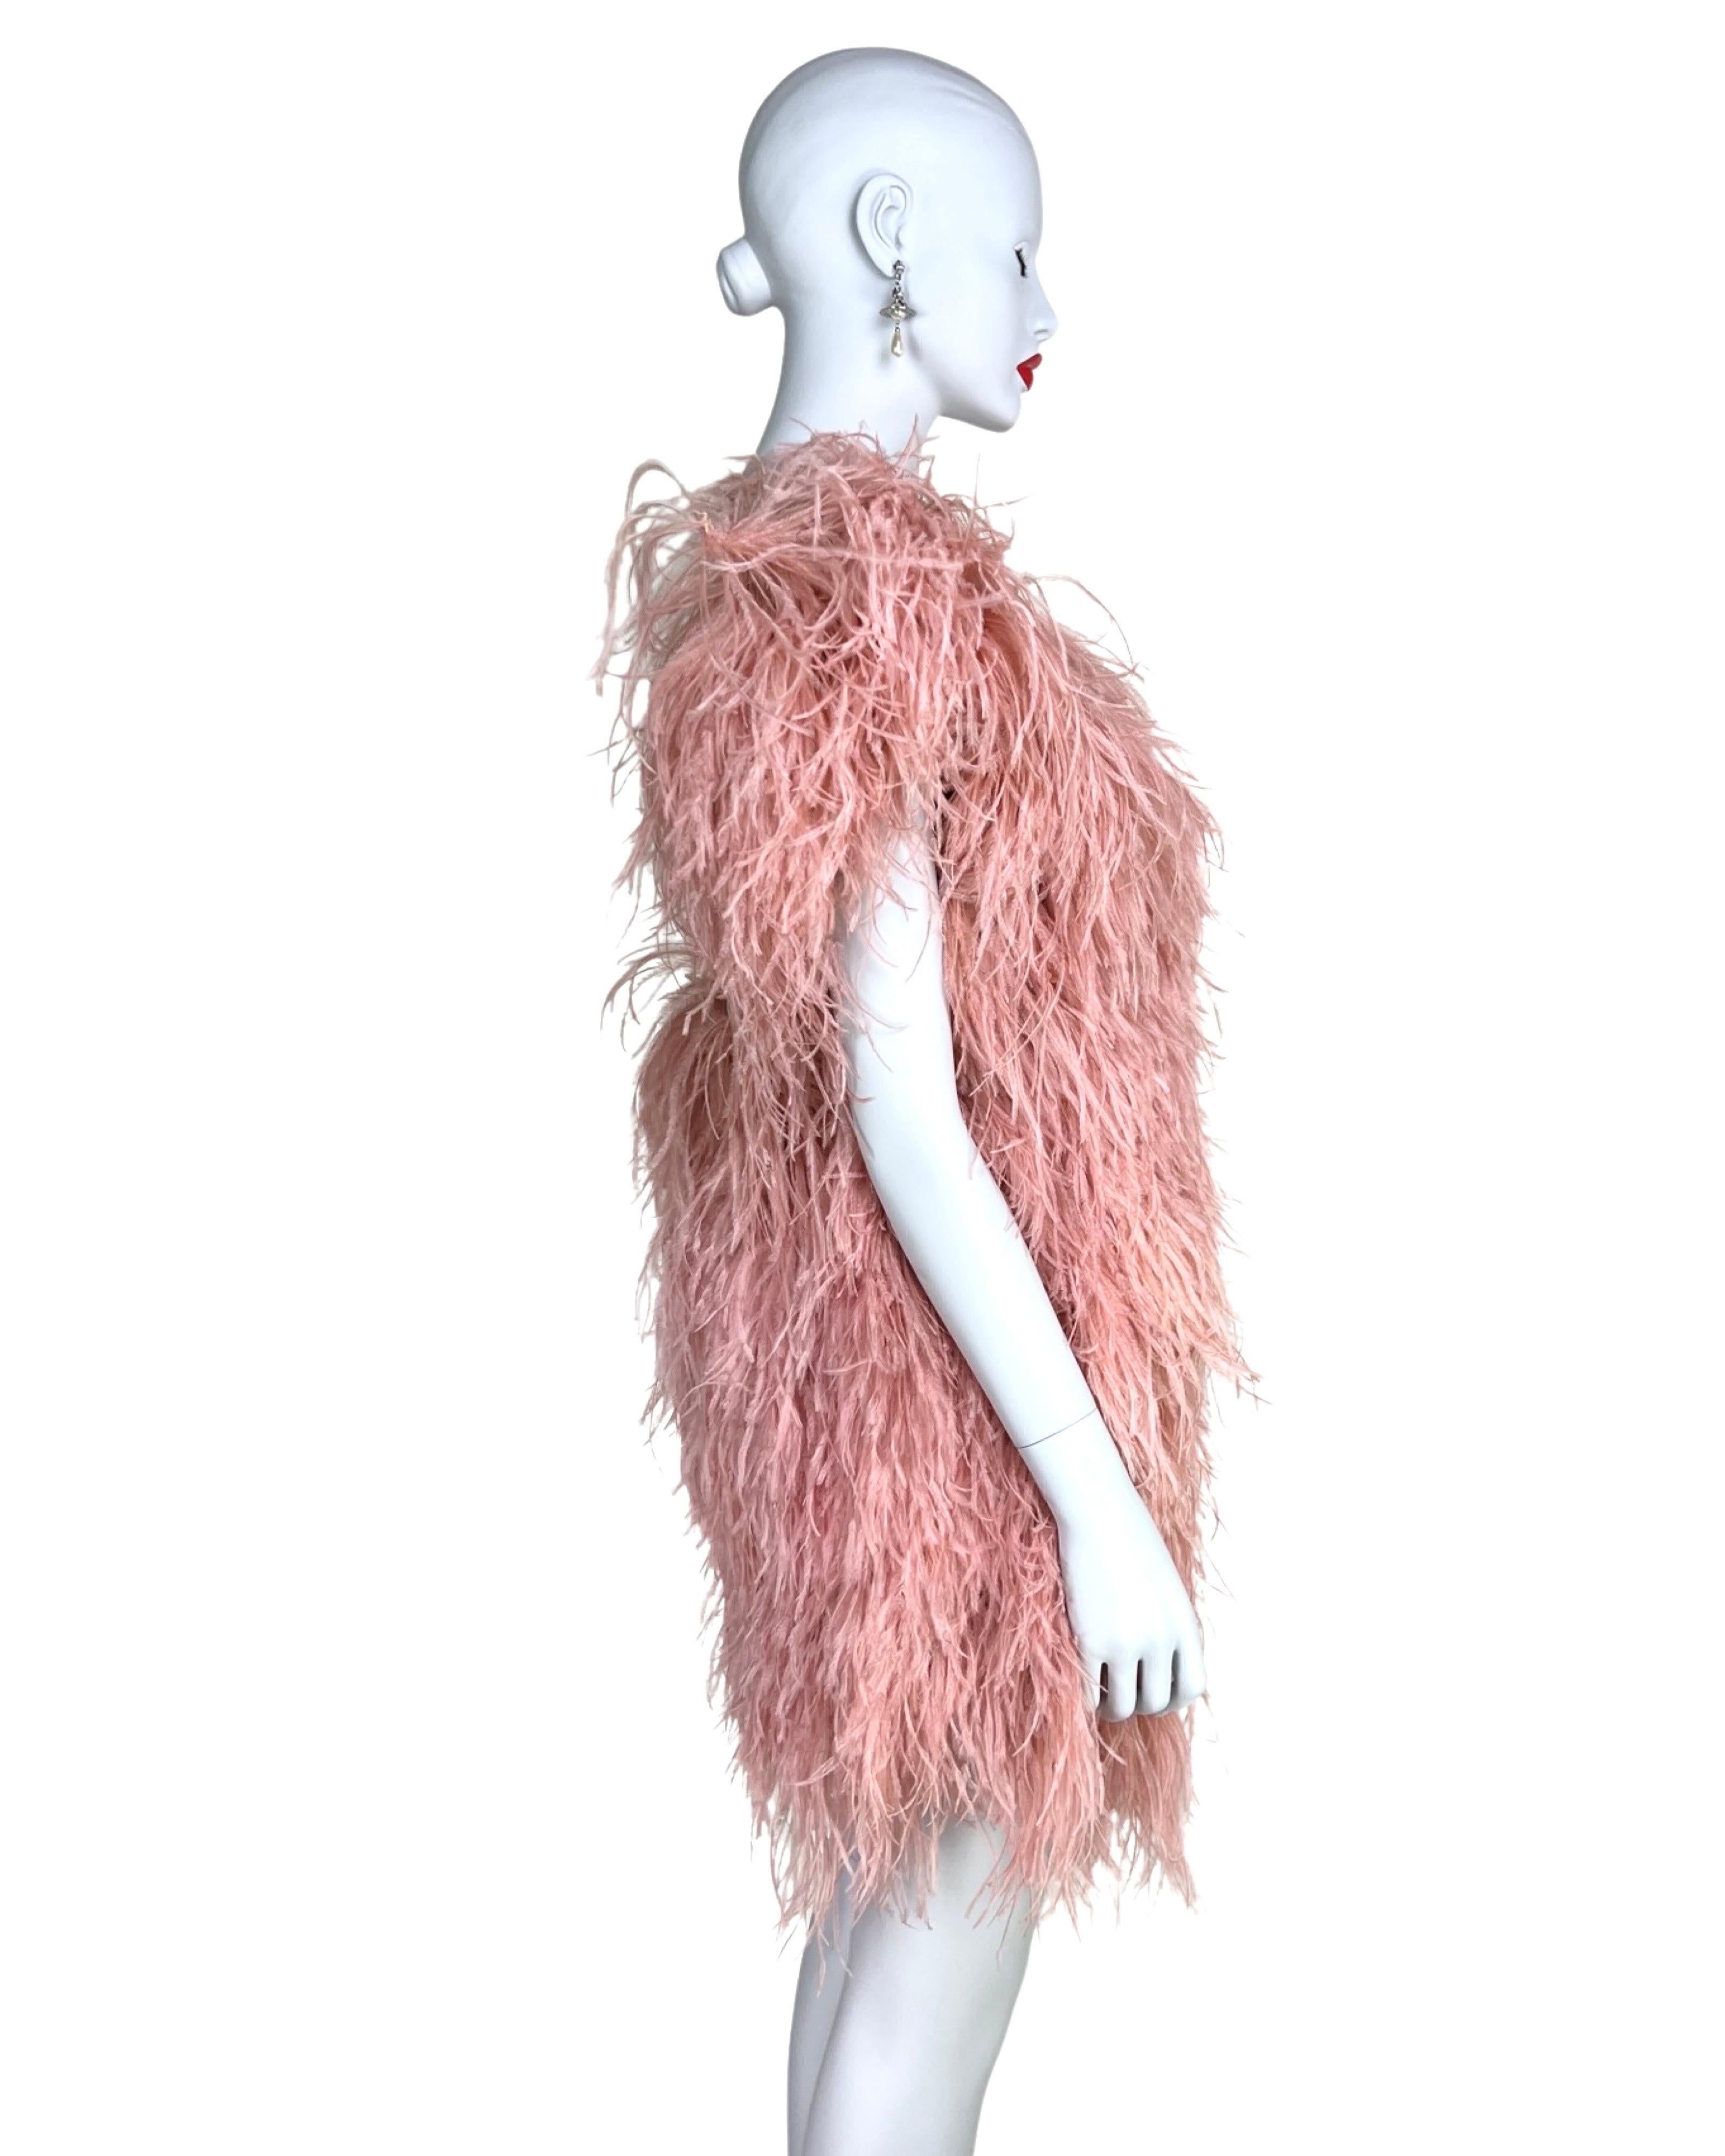 Sonia Rykiel Fall 2010 Ostrich Feather Dress For Sale 3